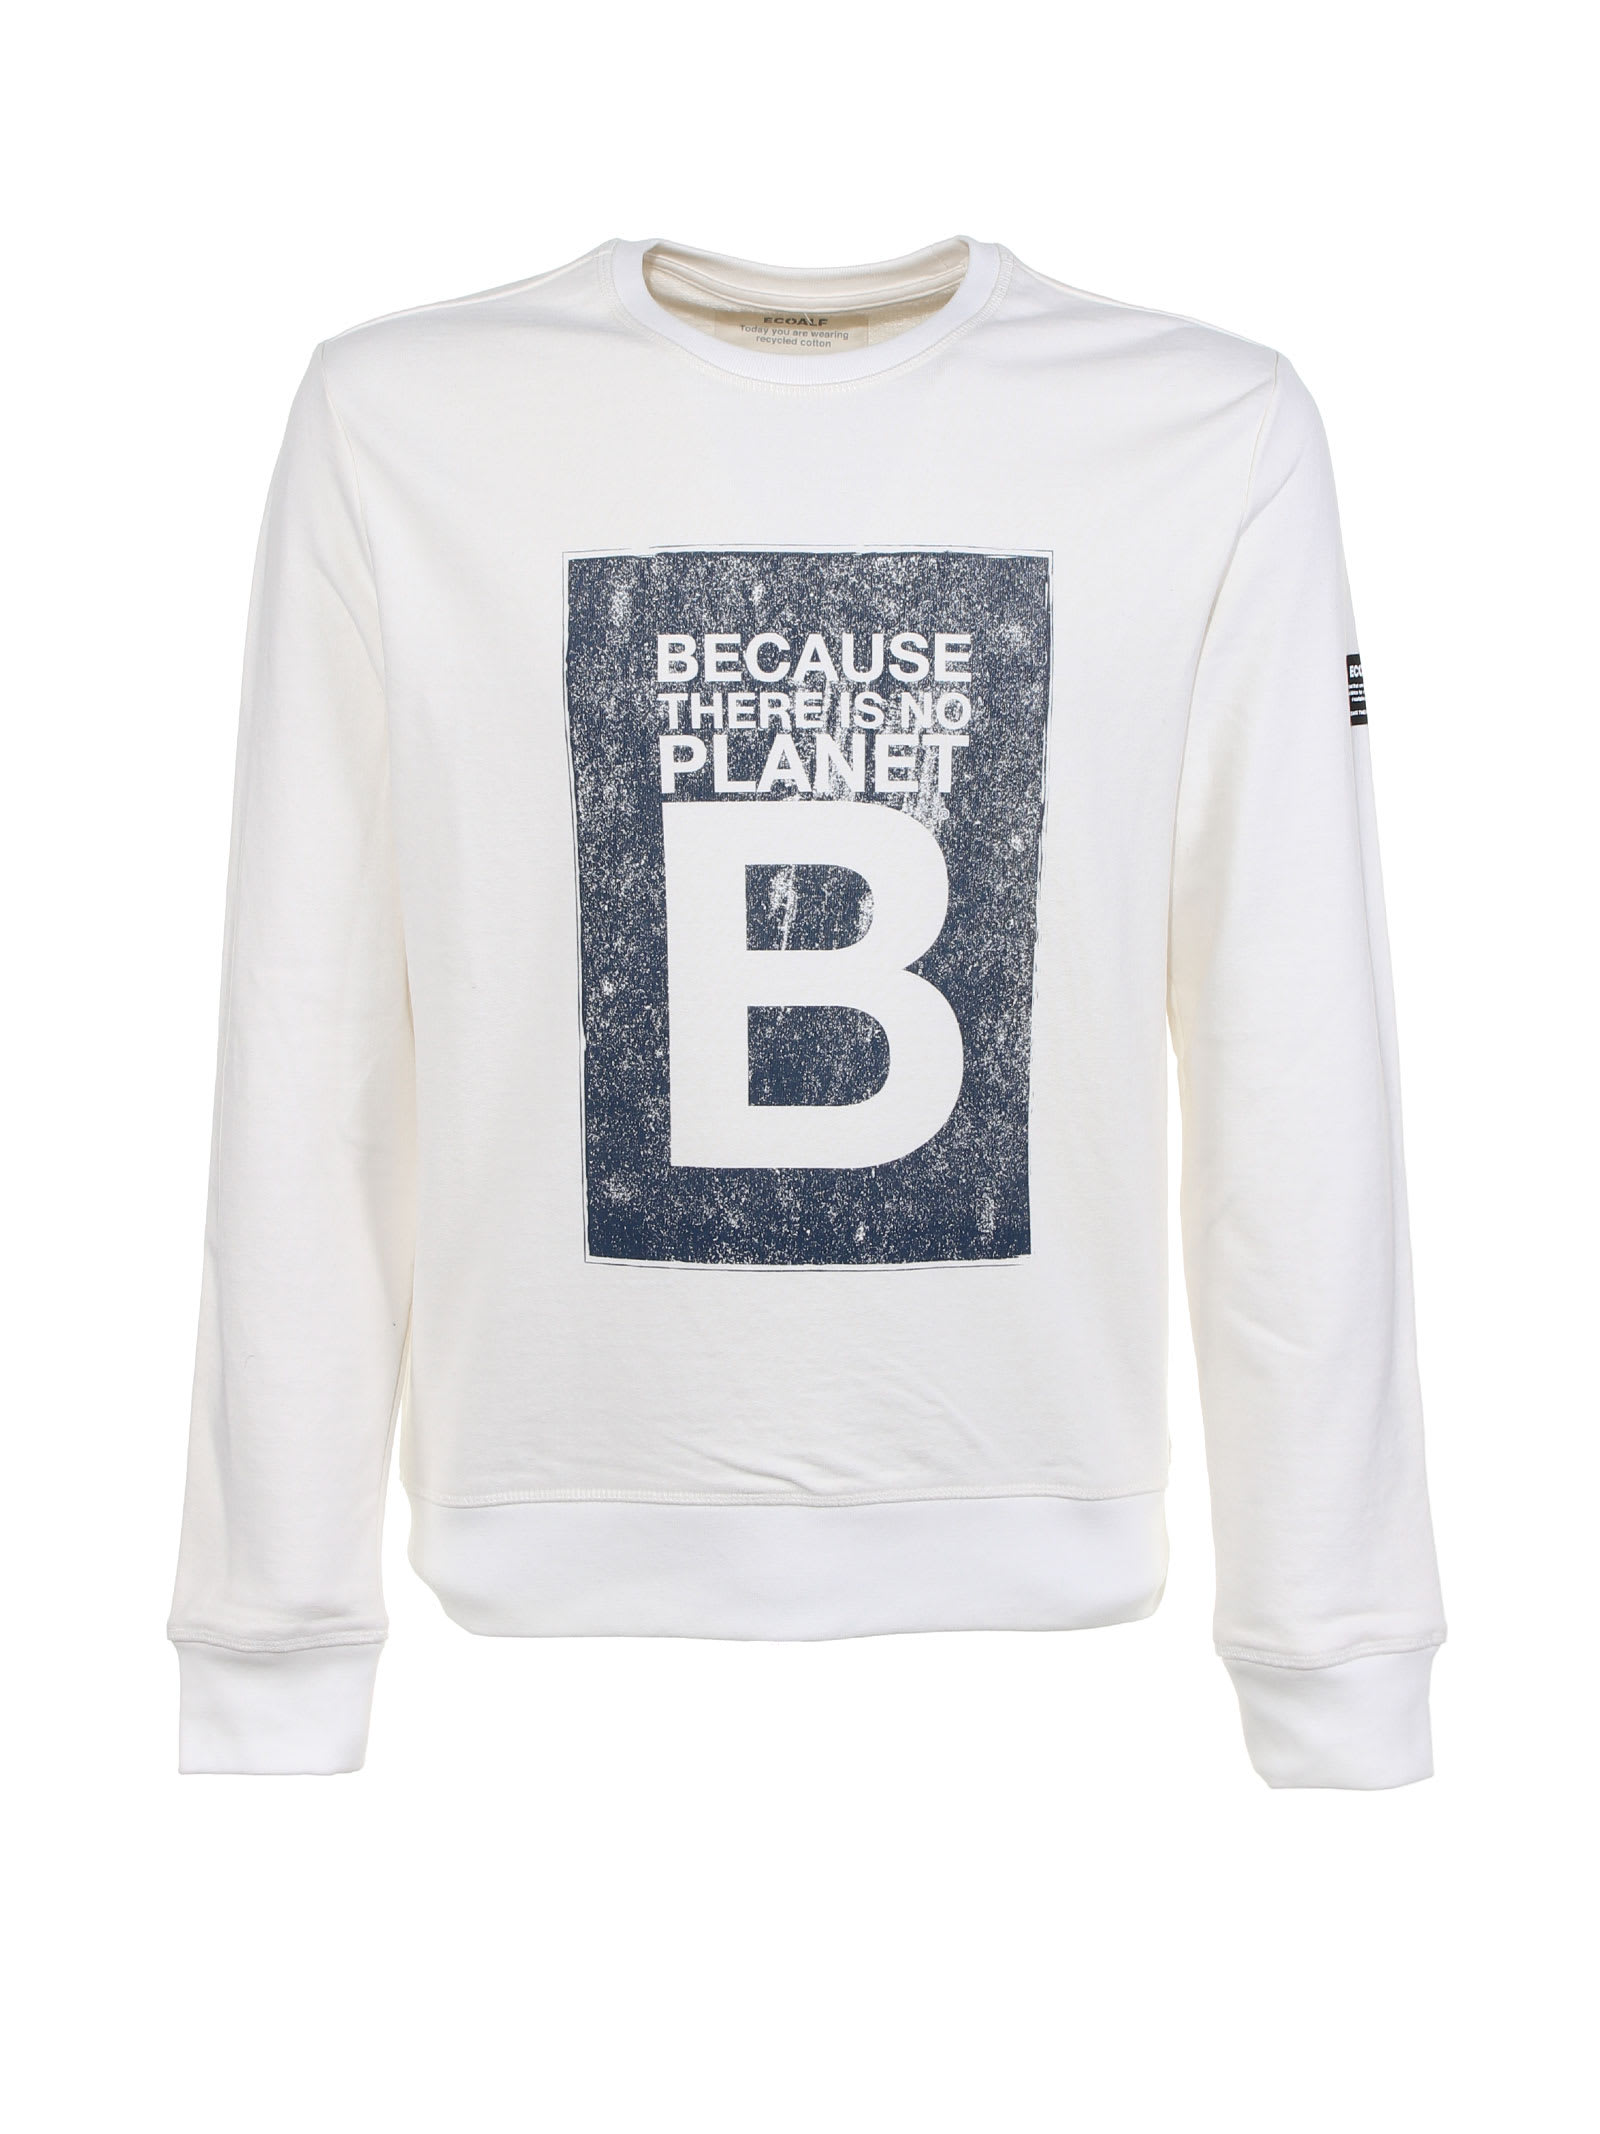 Ecoalf Sweatshirt With Contrasting Details